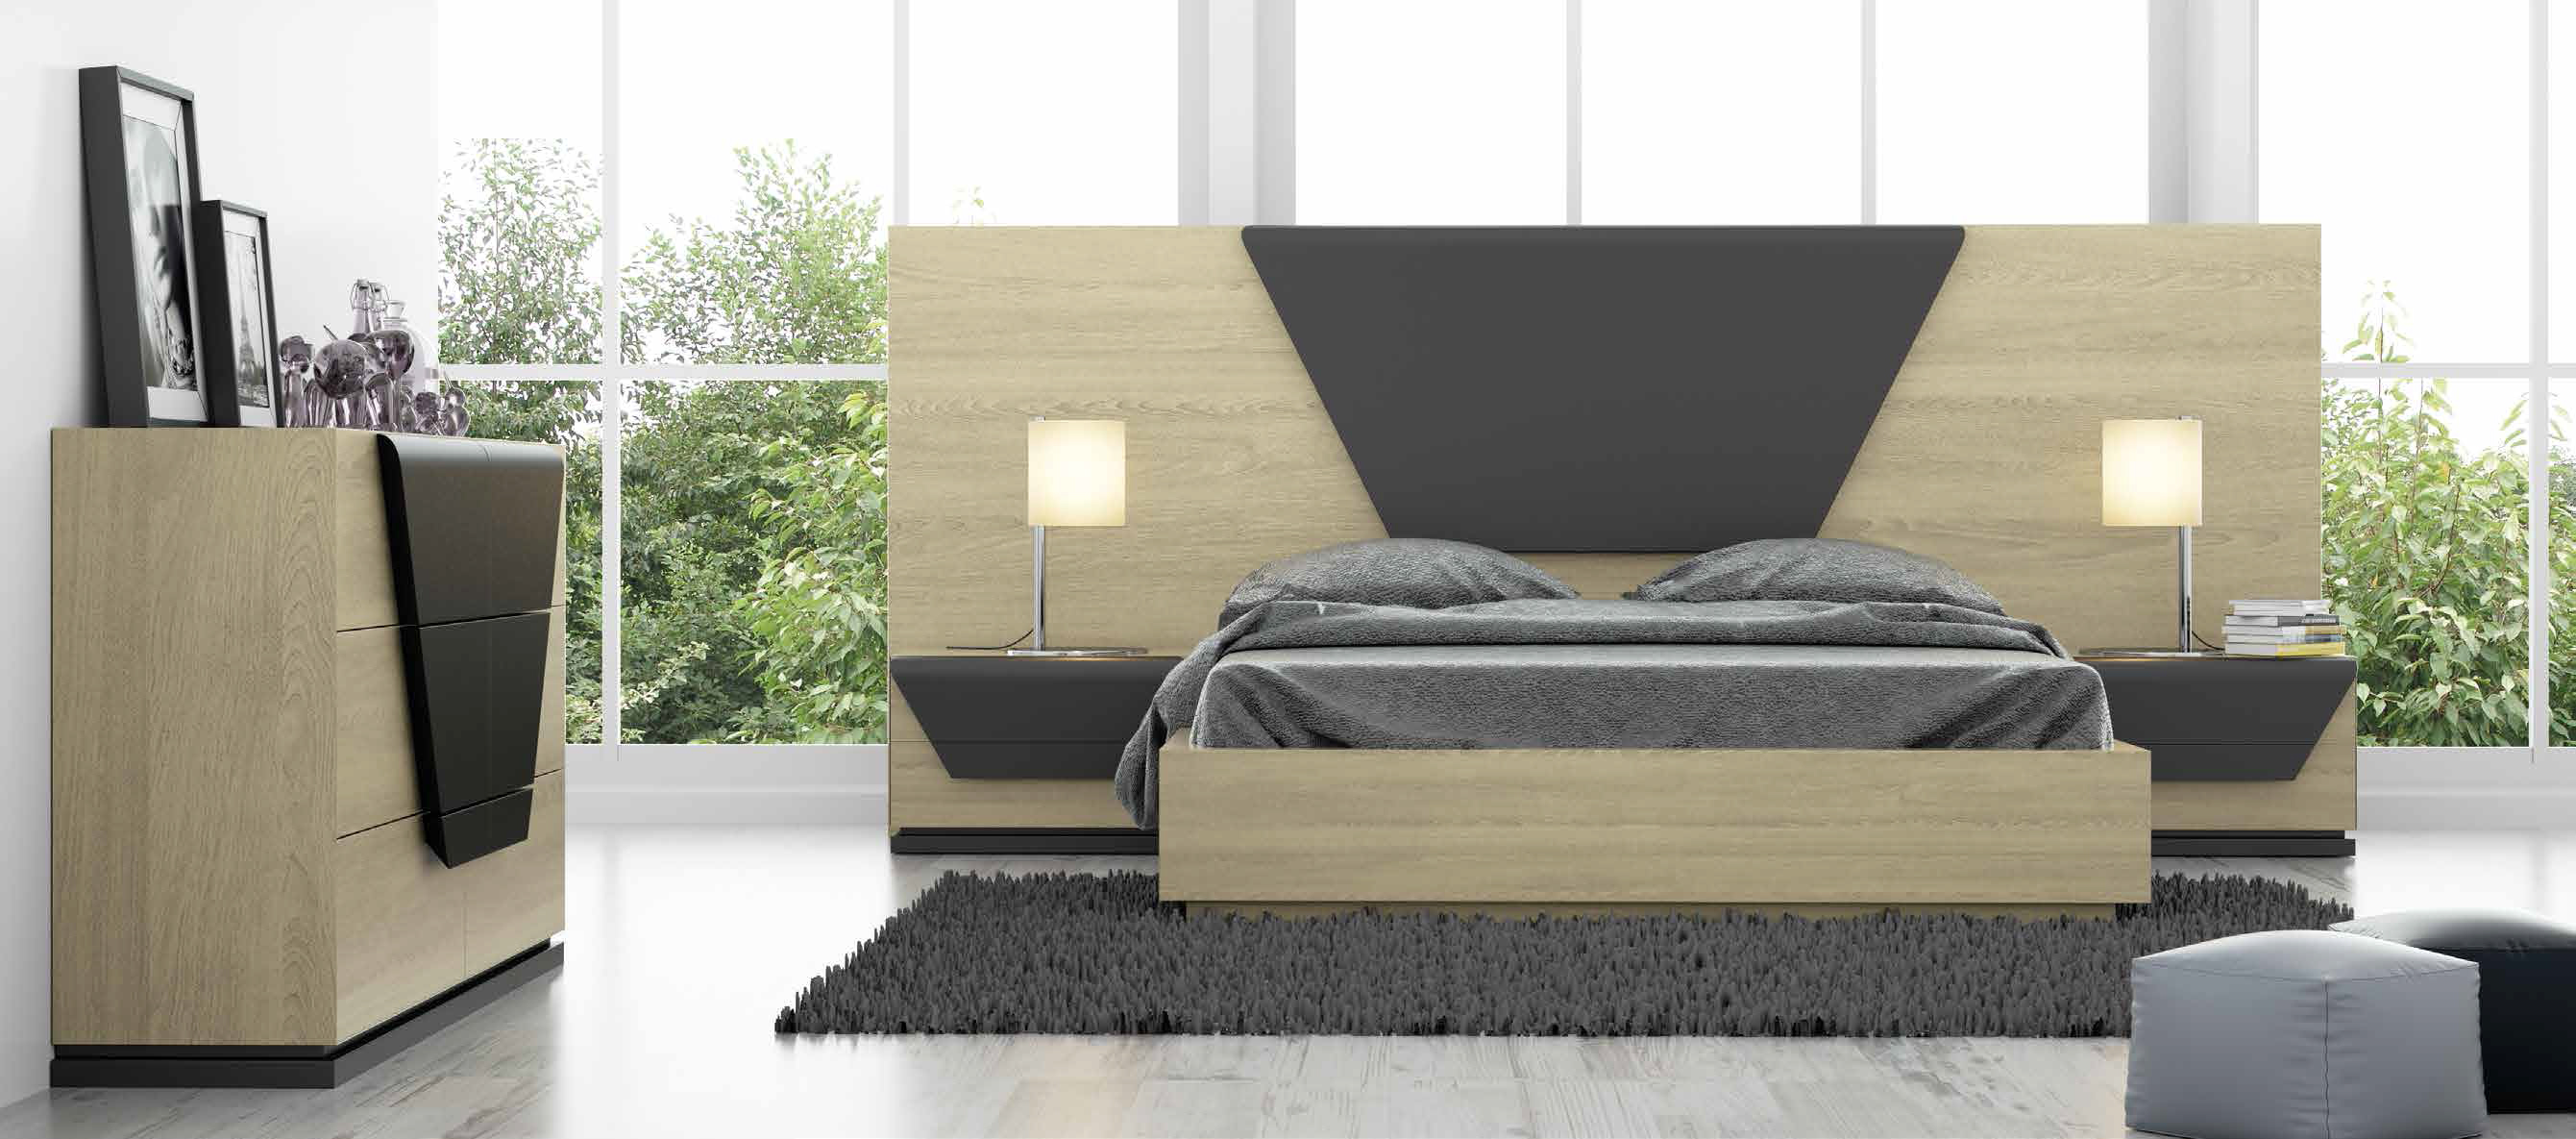 Brands Franco Furniture Bedrooms vol1, Spain DOR 85